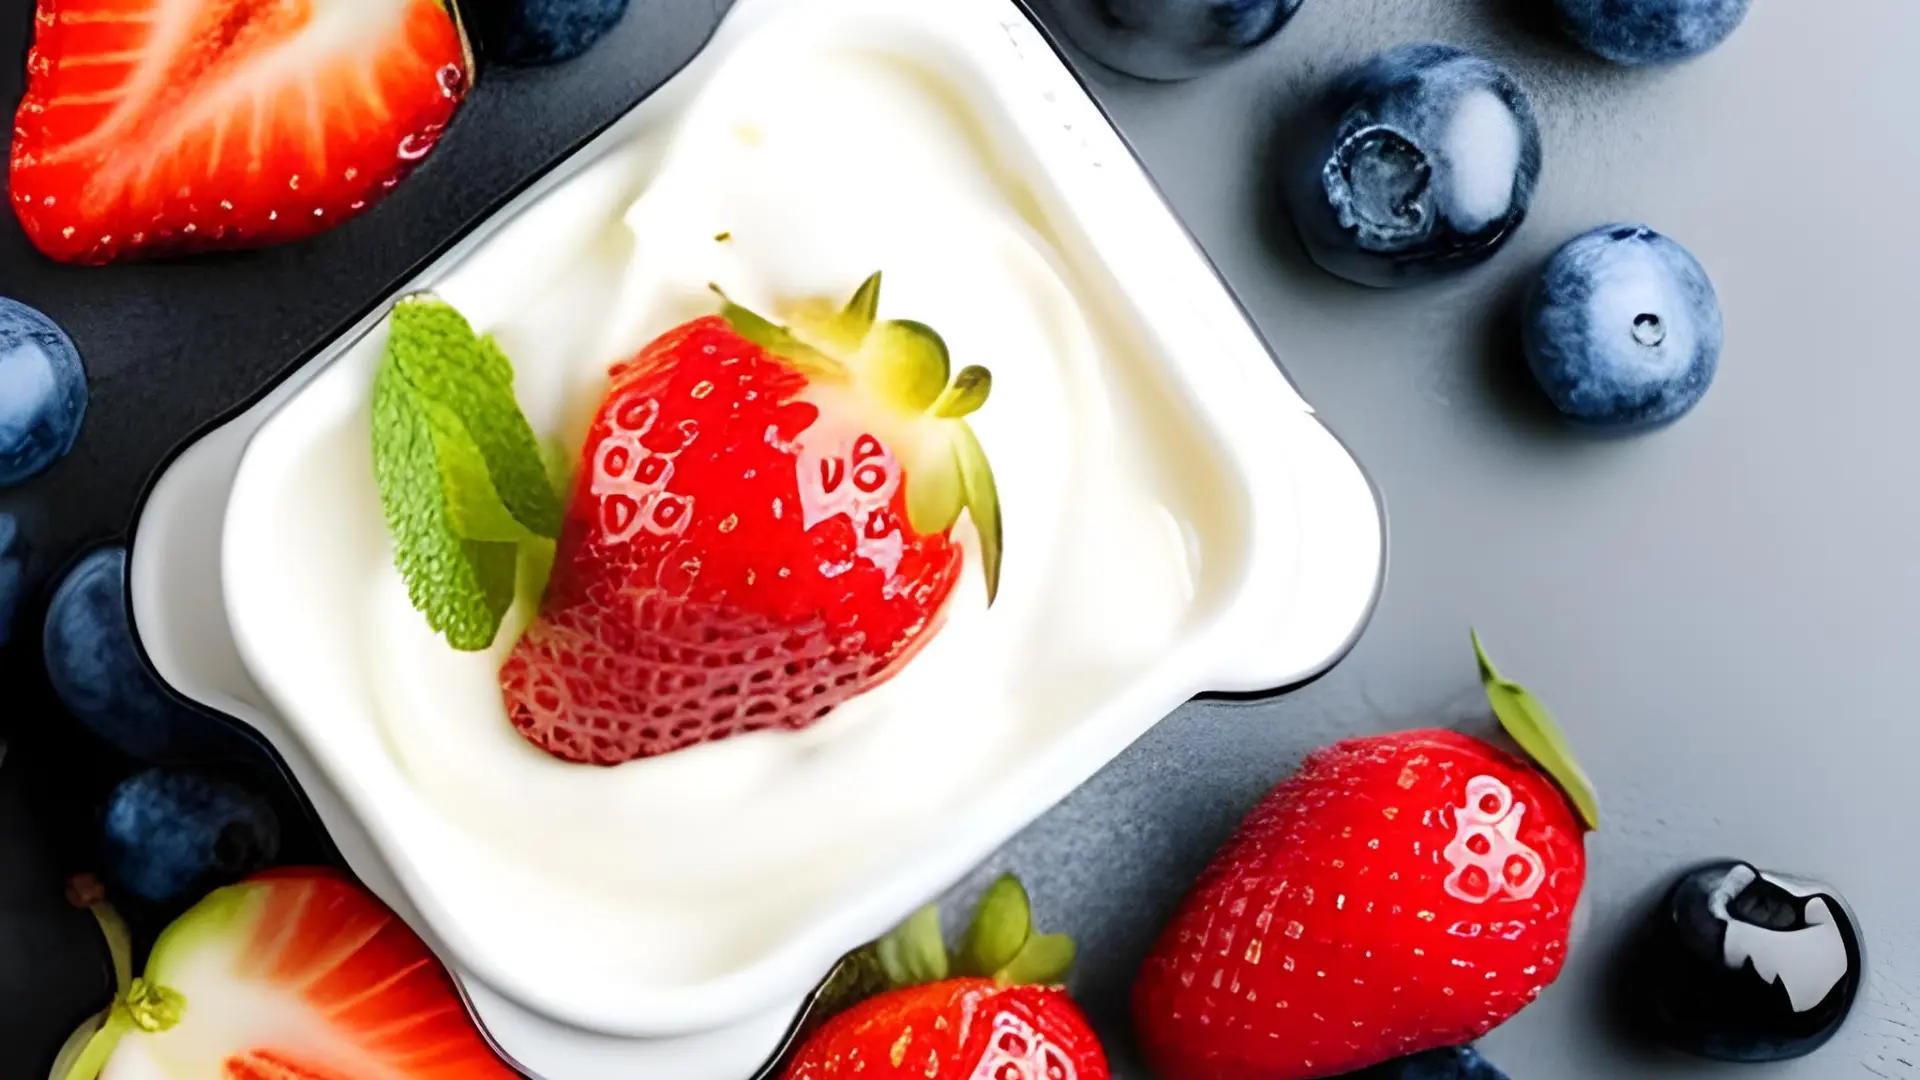 Greek yoghurt with berries and nuts